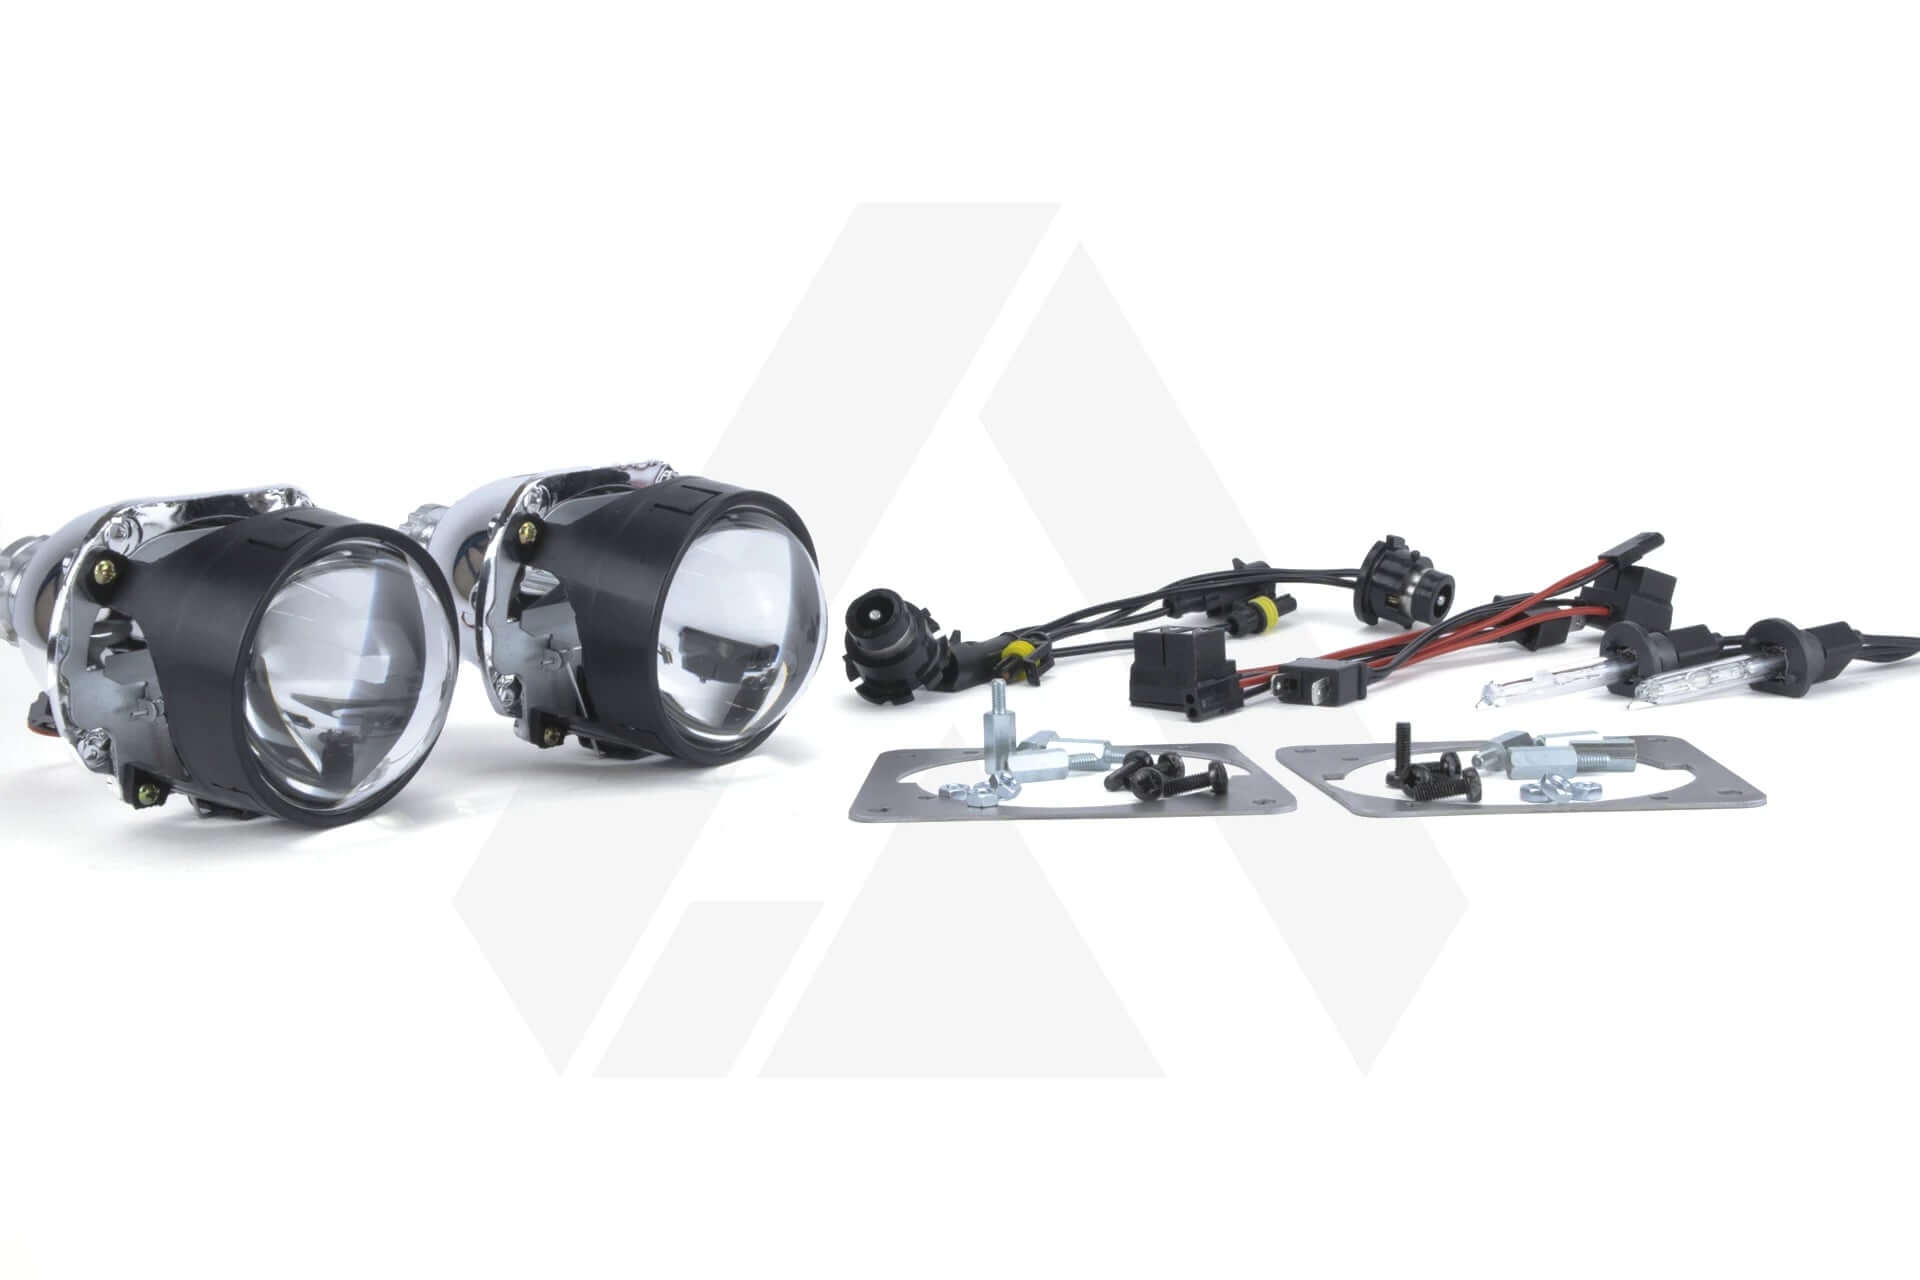 Renault Megane 2 facelift 06-09 bi-xenon headlight repair & upgrade kit for D1S xenon HID headlights